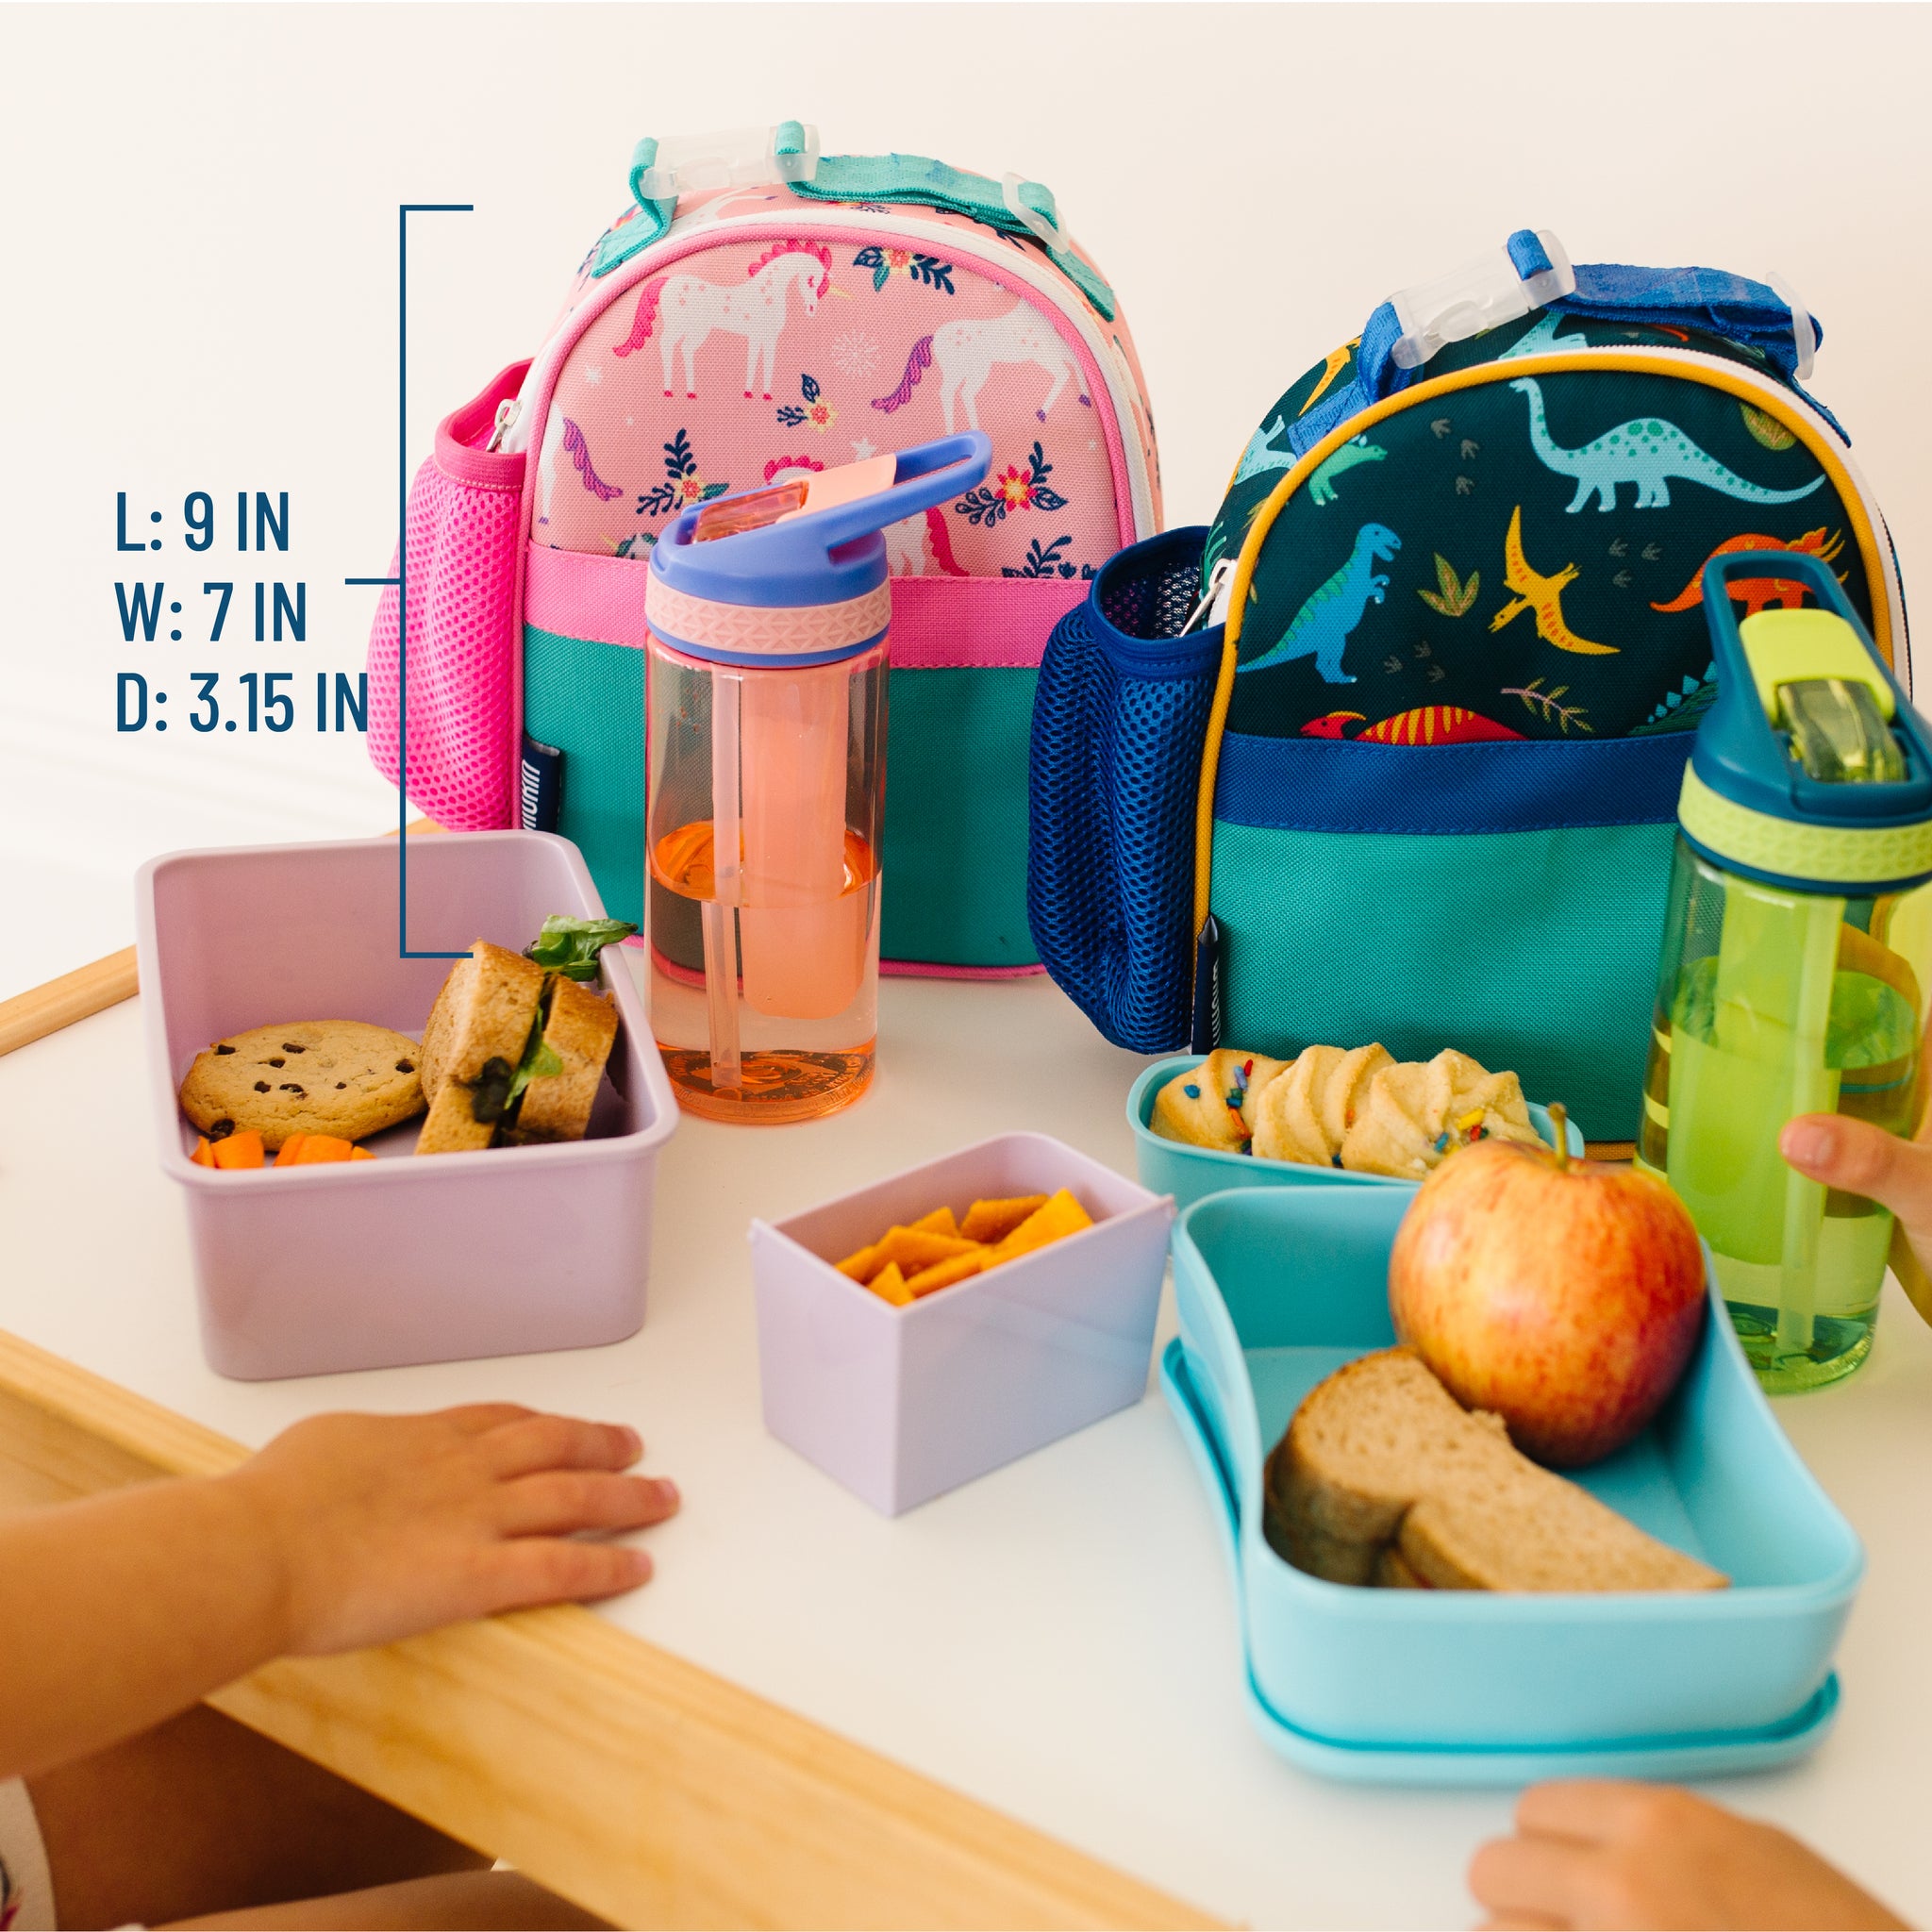 Wildkin Kids Insulated Lunch Box Bag (Magical Unicorns)